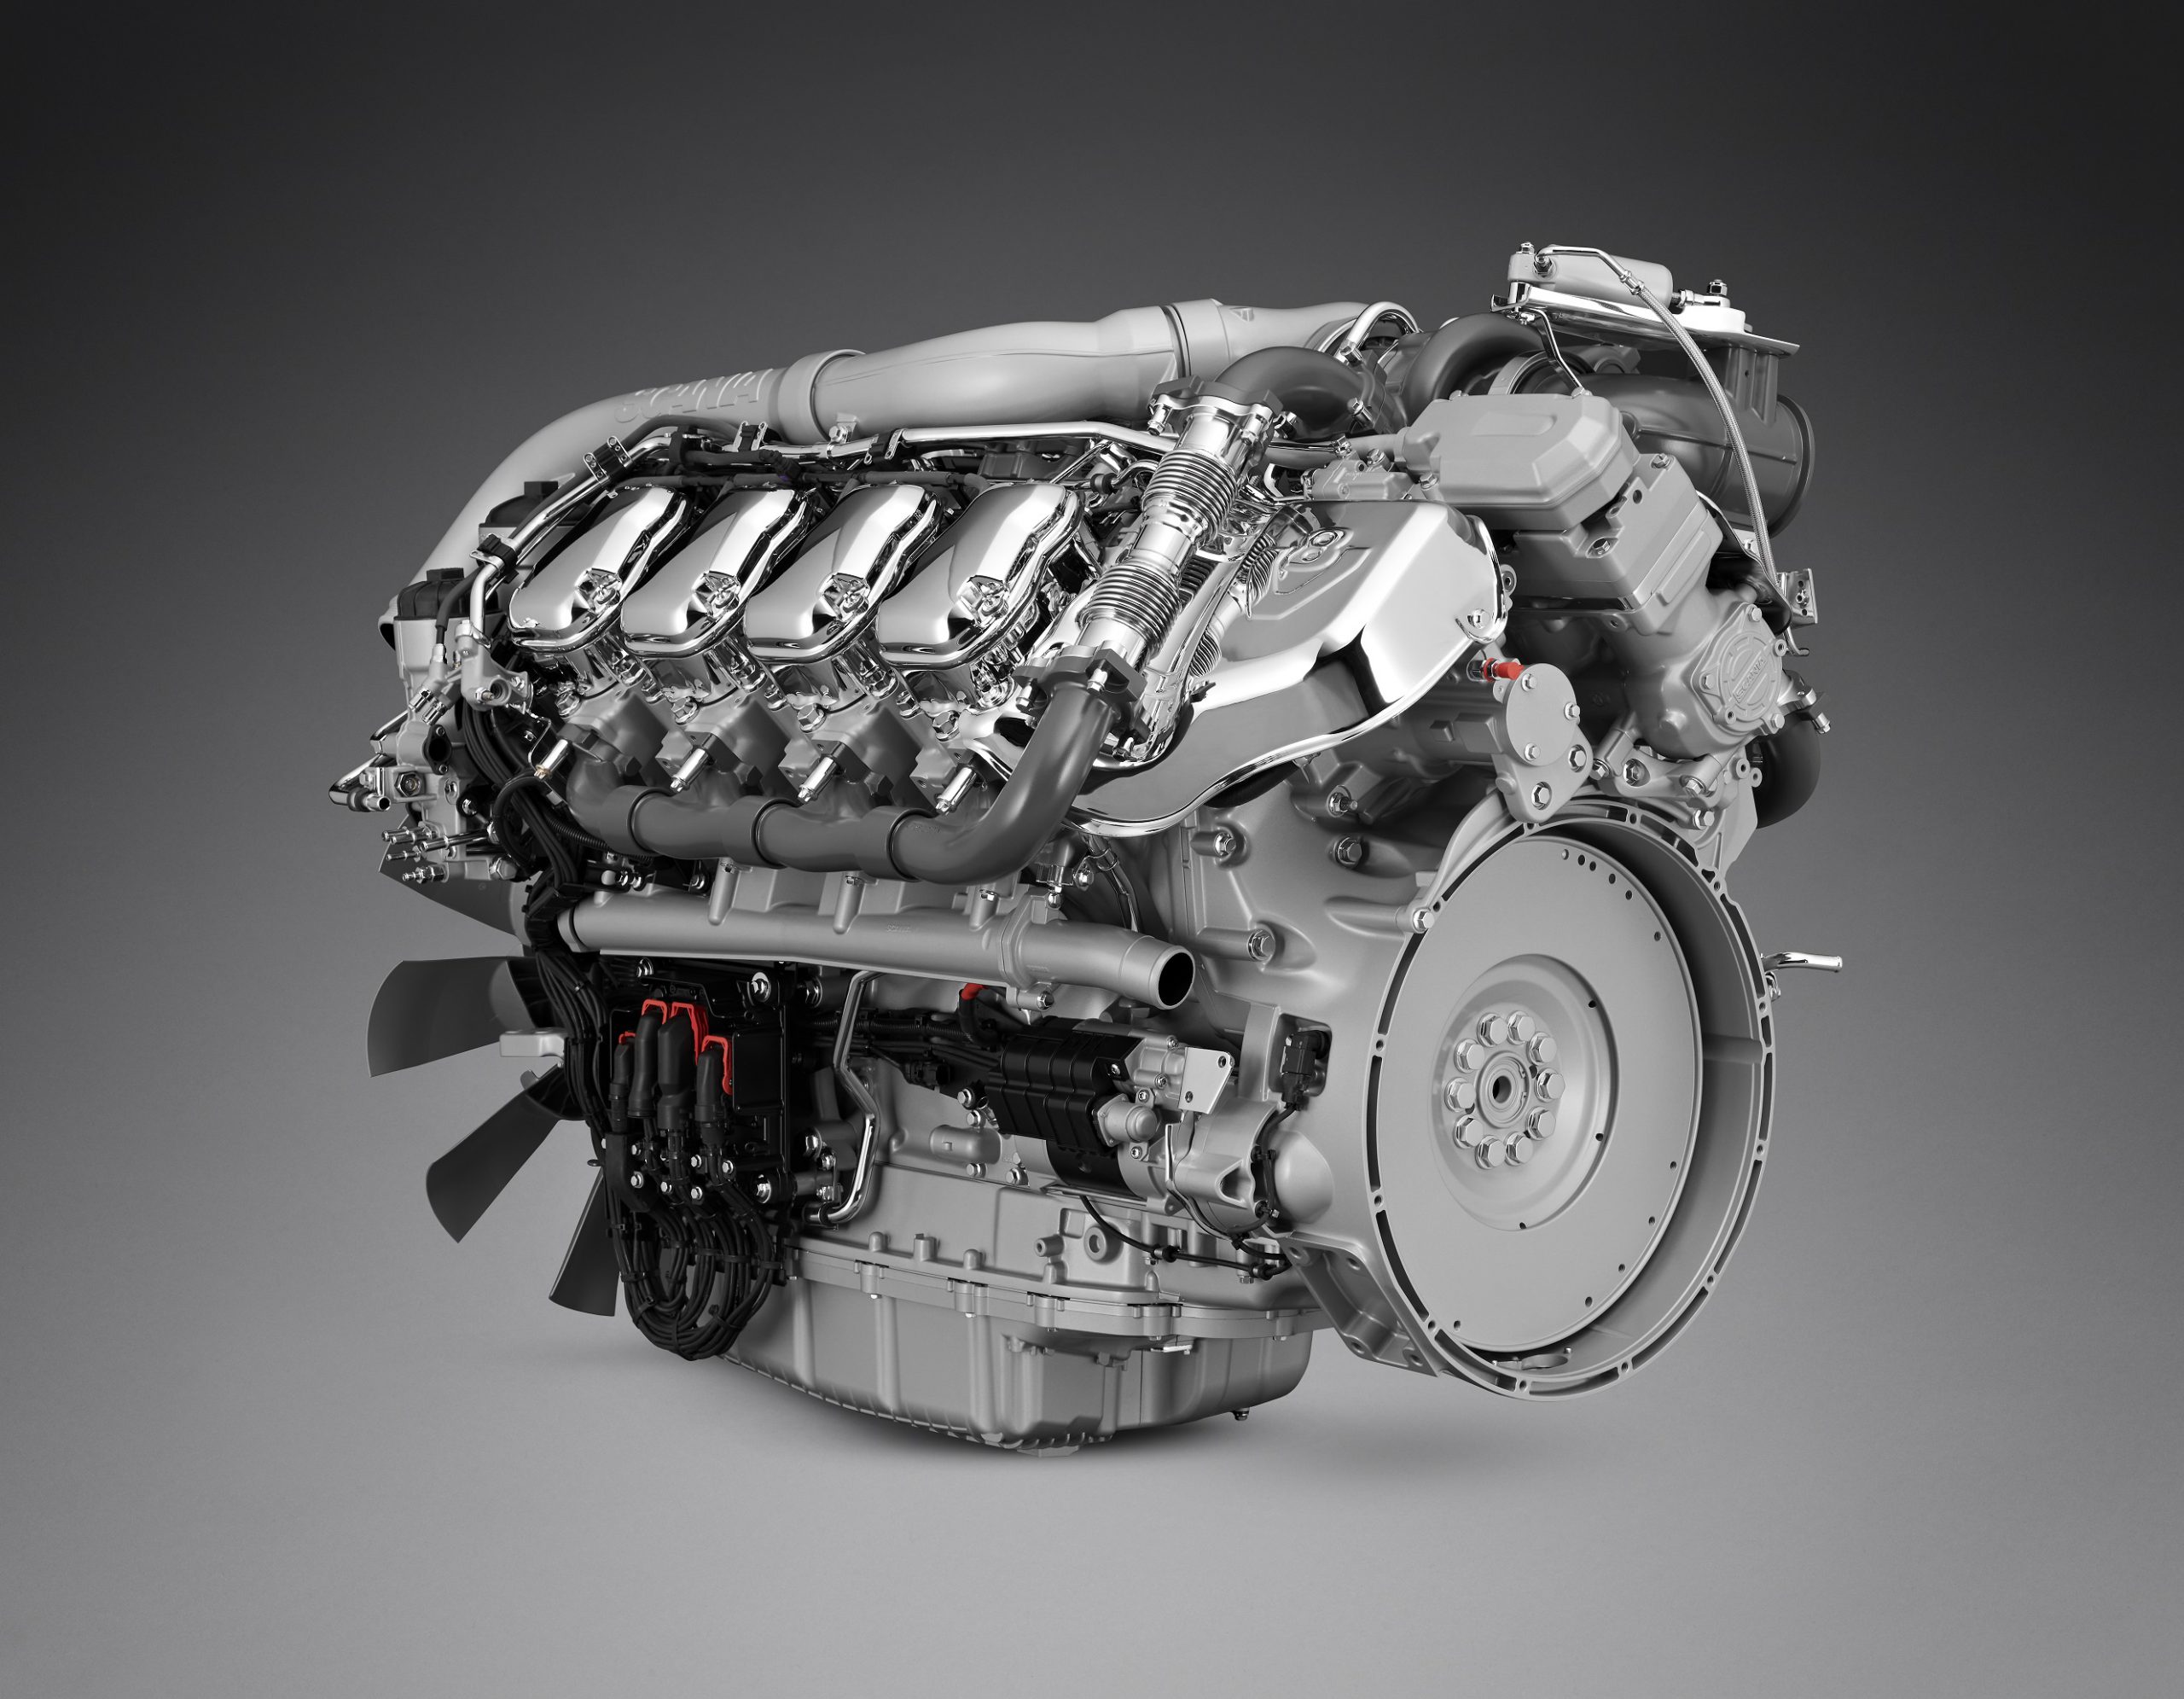 A higher power peak for the iconic Scania V8 engine - Powertrain - Diesel  International